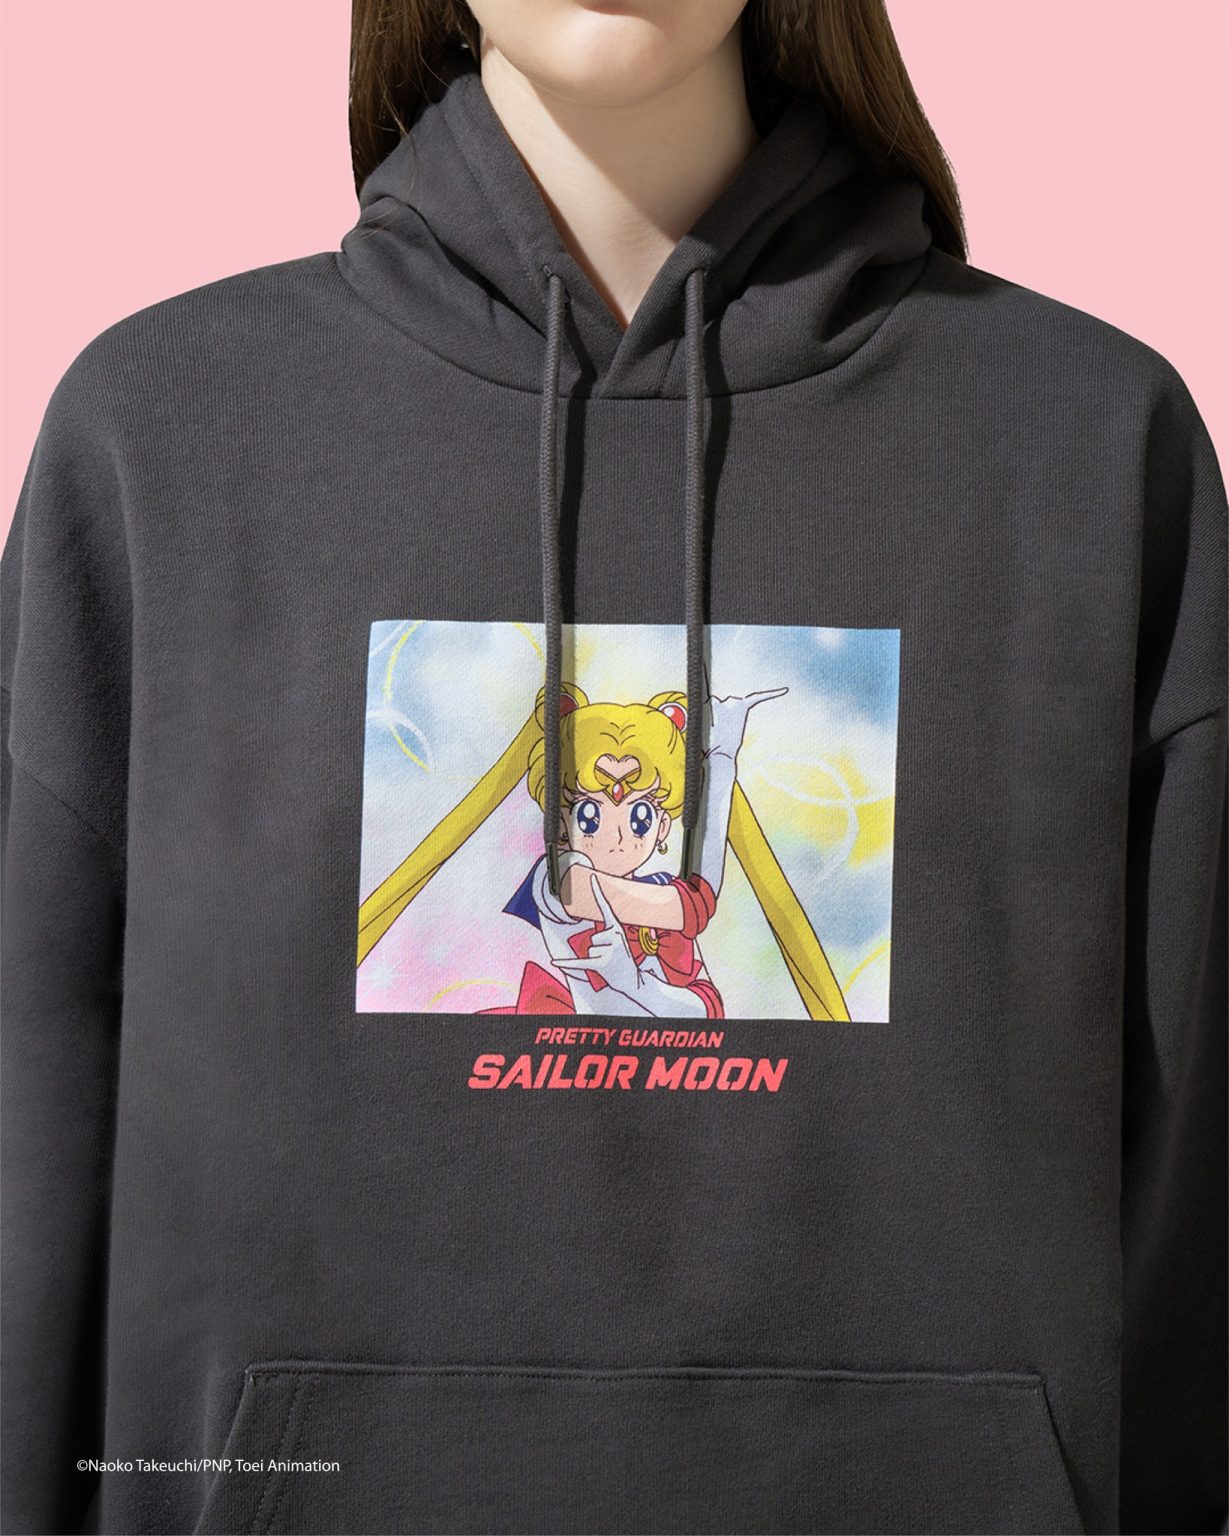 CHOCOOLATE x Sailor Moon Feb 2022 Collection